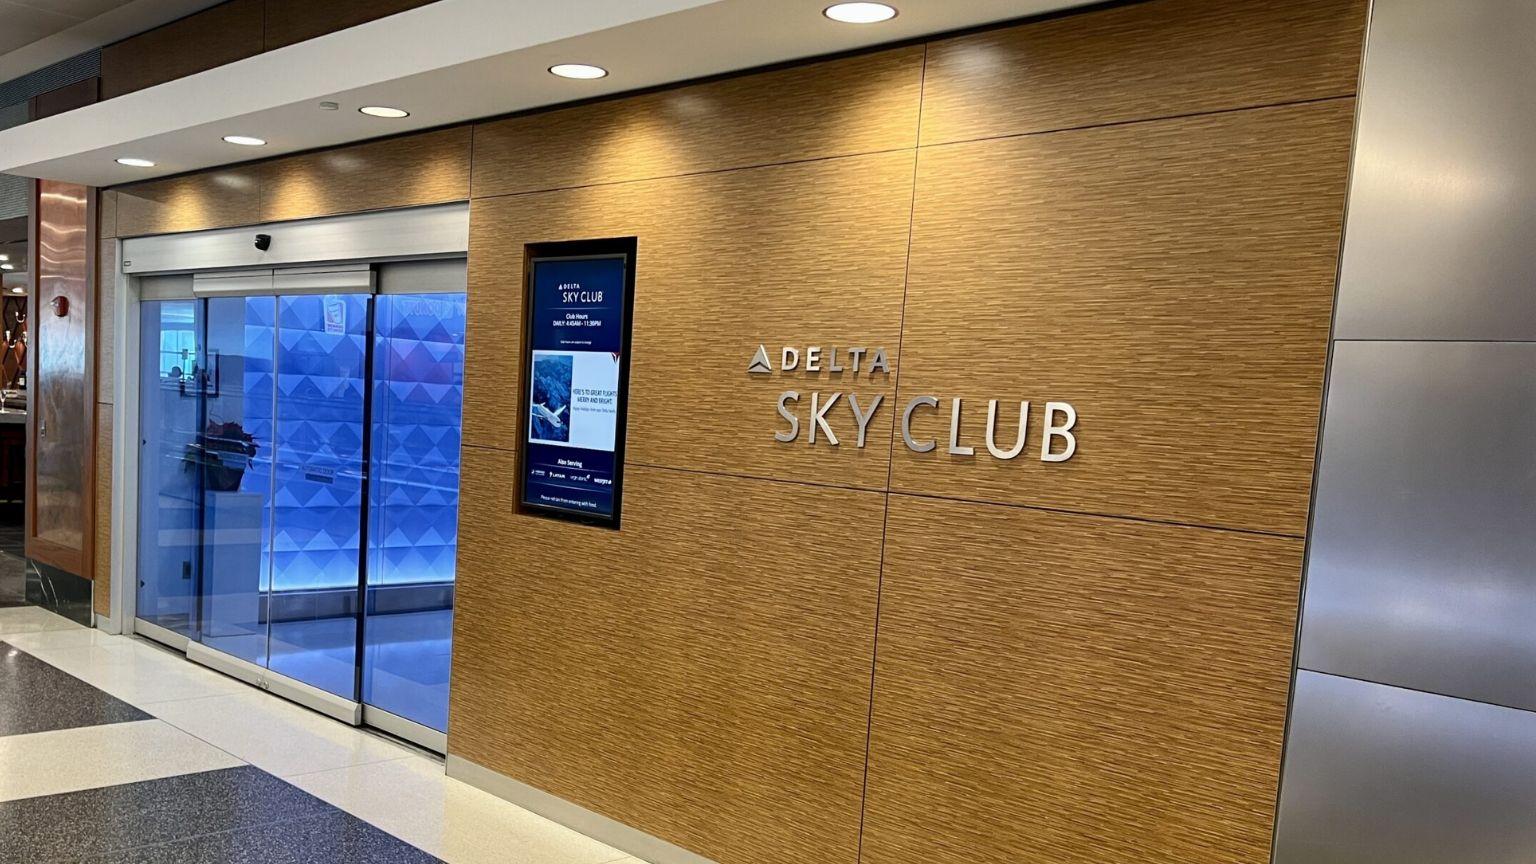 Delta Sky Club Express Lounge, Terminal 4, JFK